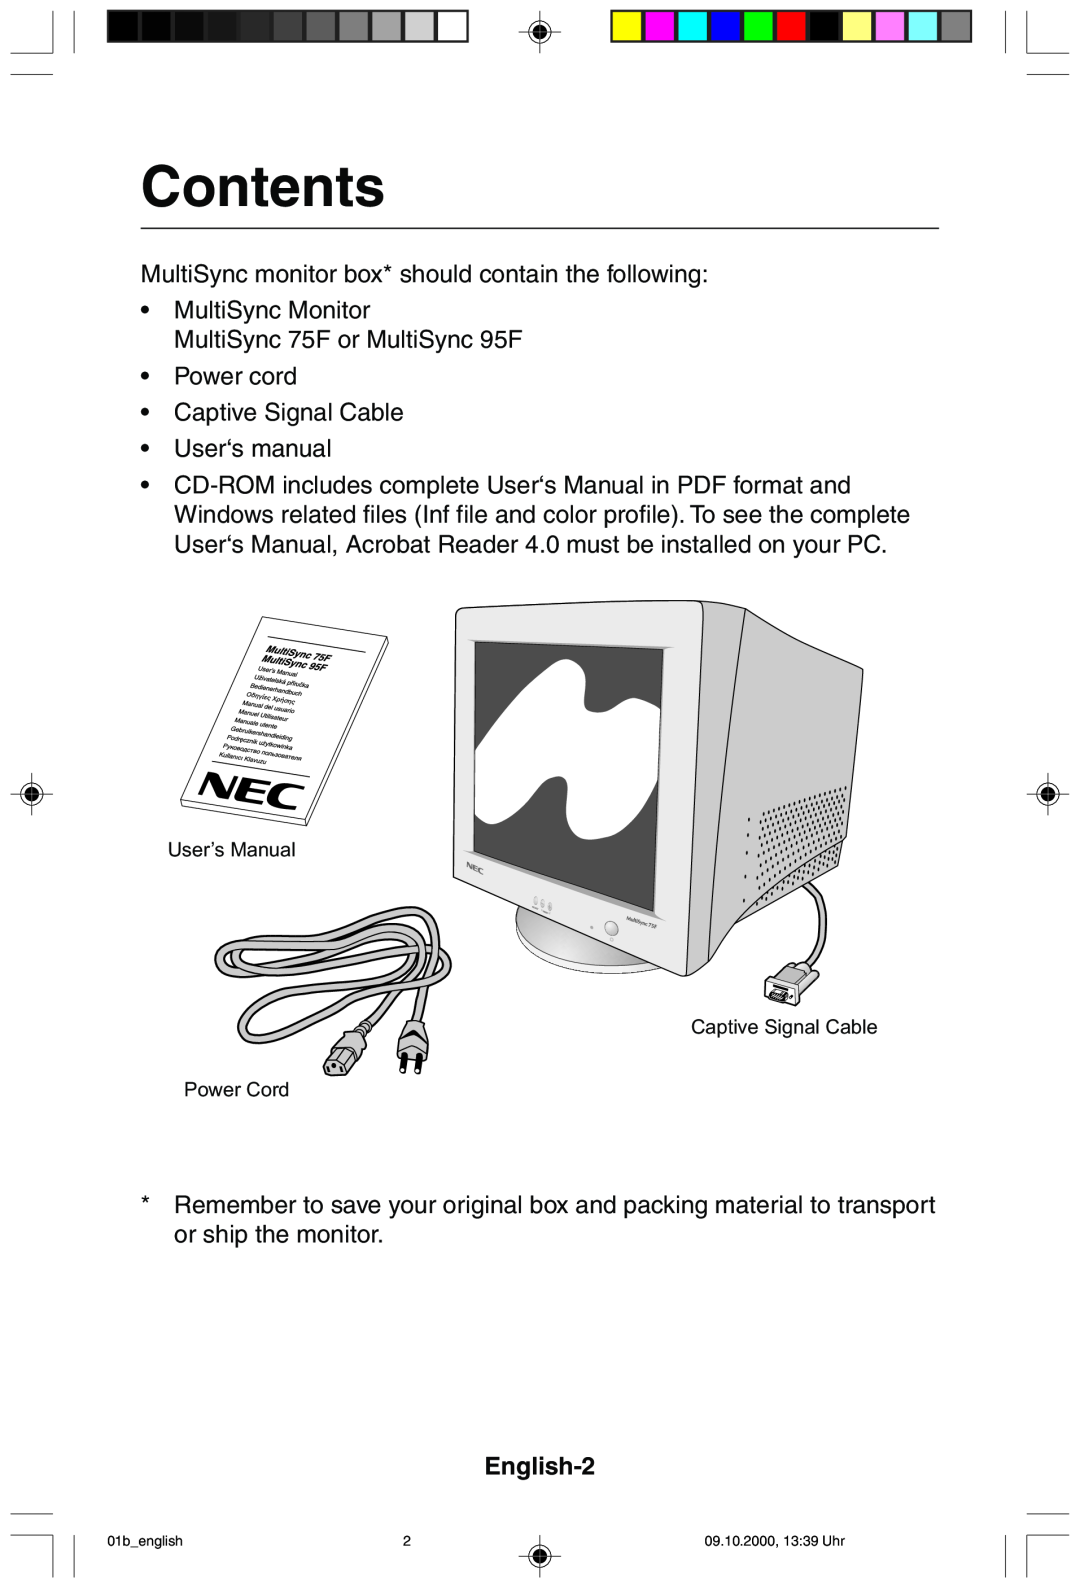 NEC 95F user manual Contents, English-2 